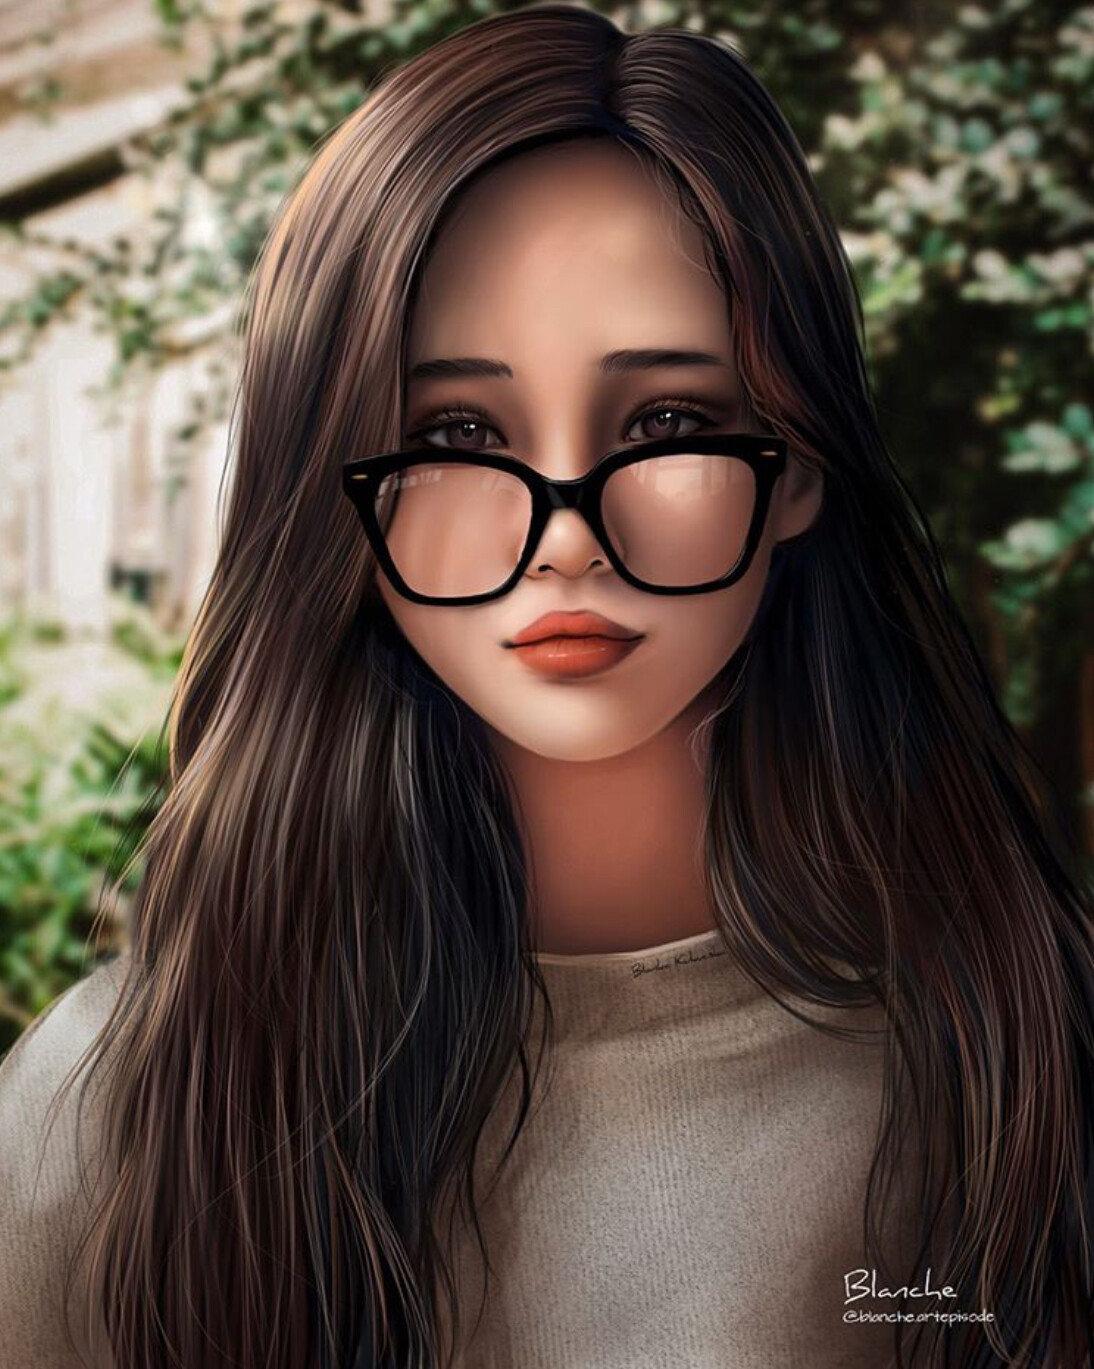 Blancheartepisode Girl In Glasses Digital Art 